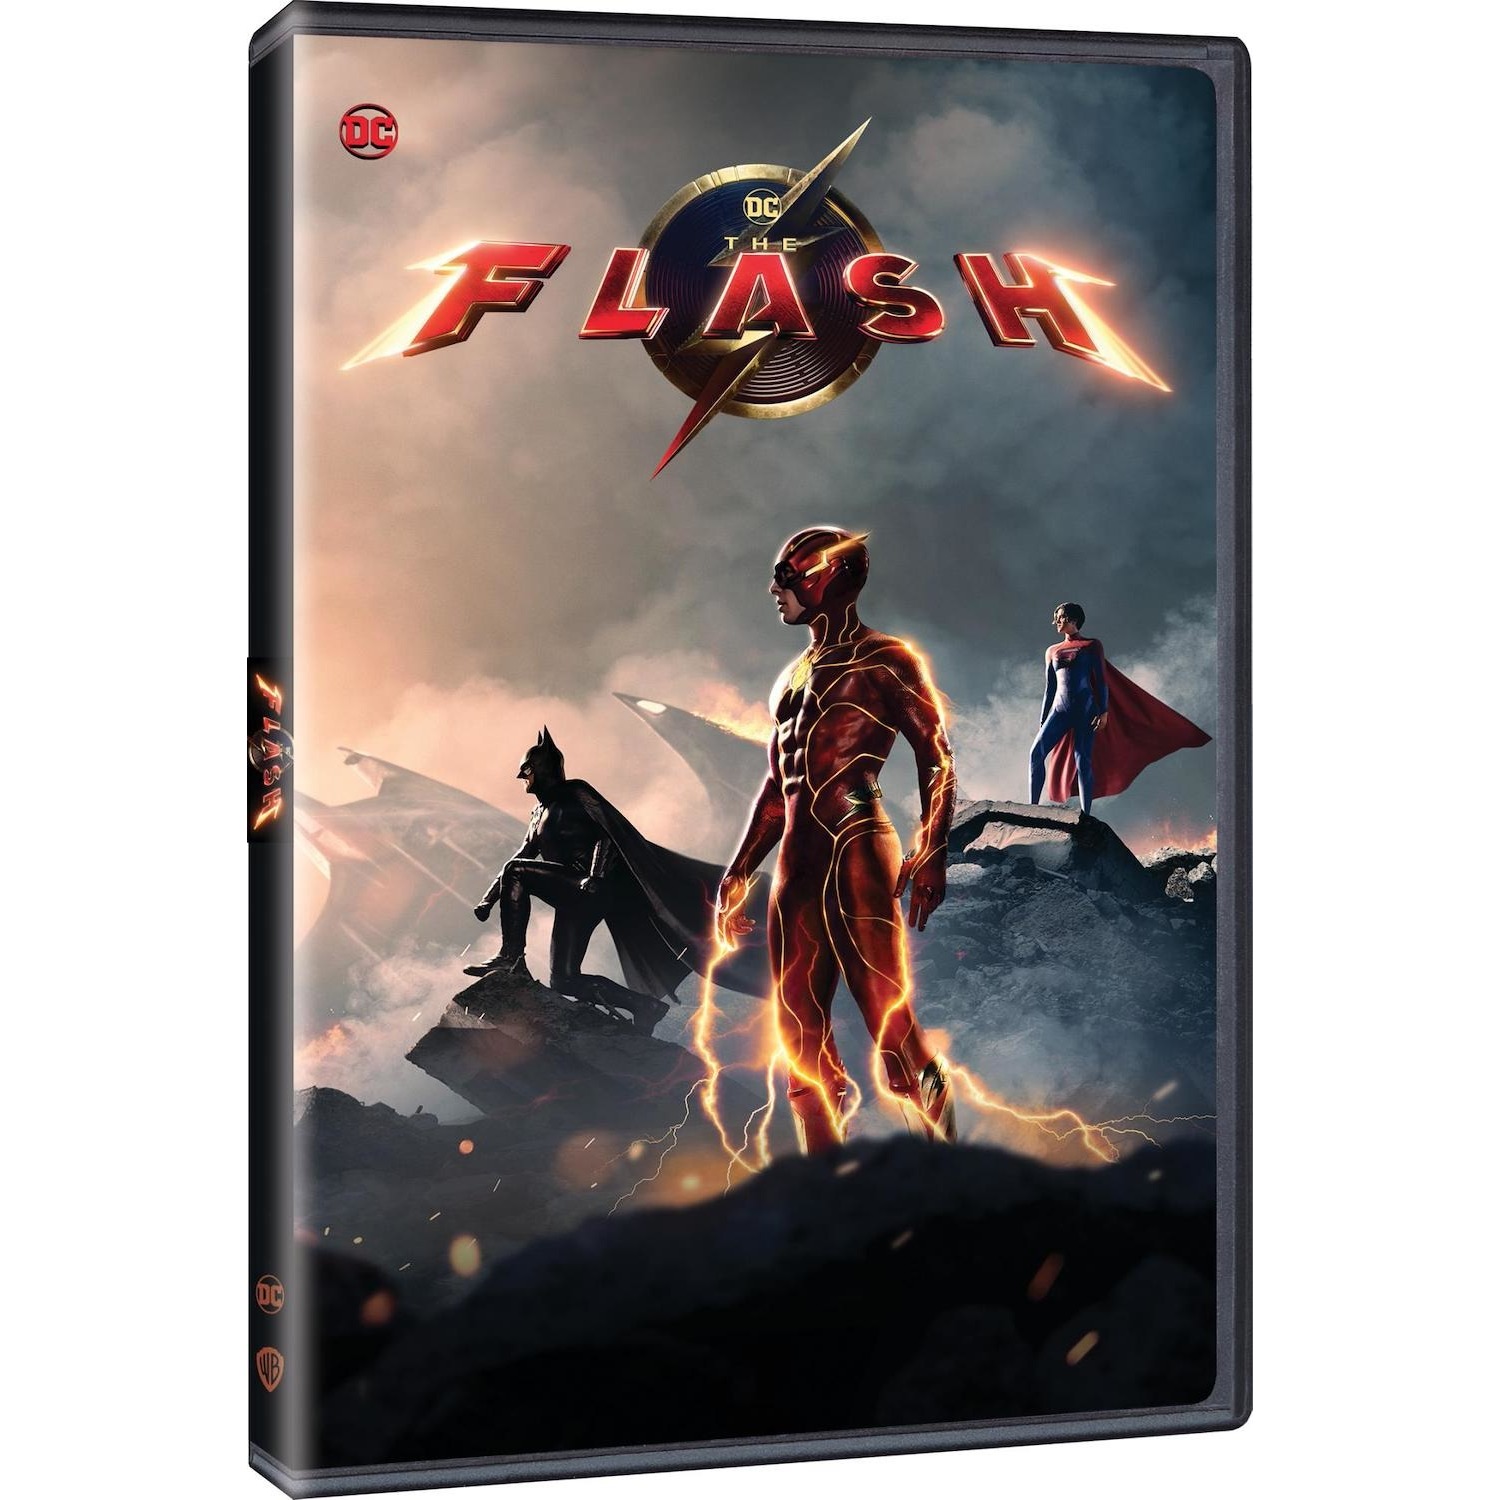 Immagine per DVD The Flash da DIMOStore